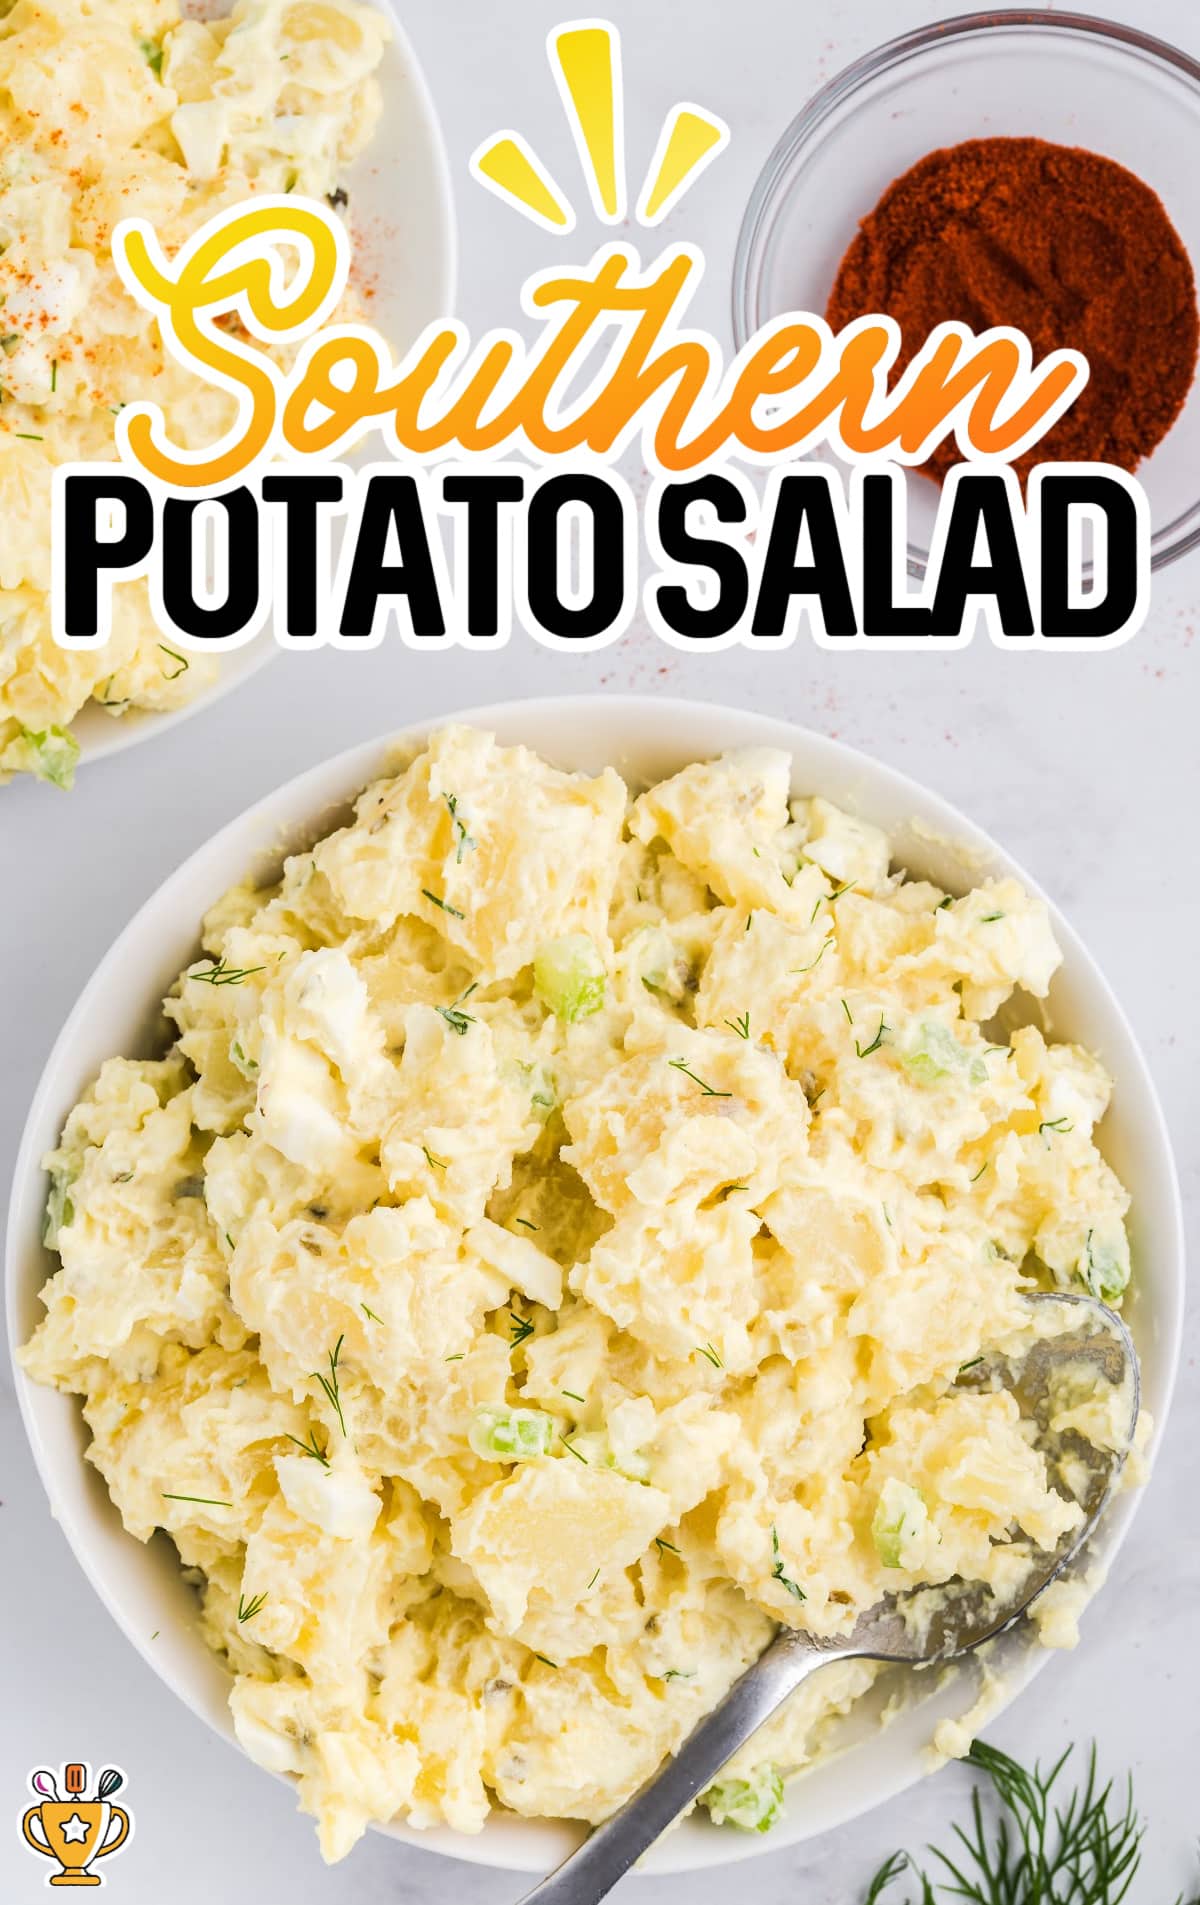 Southern Potato Salad Recipe | Side Dish | The Best Blog Recipes